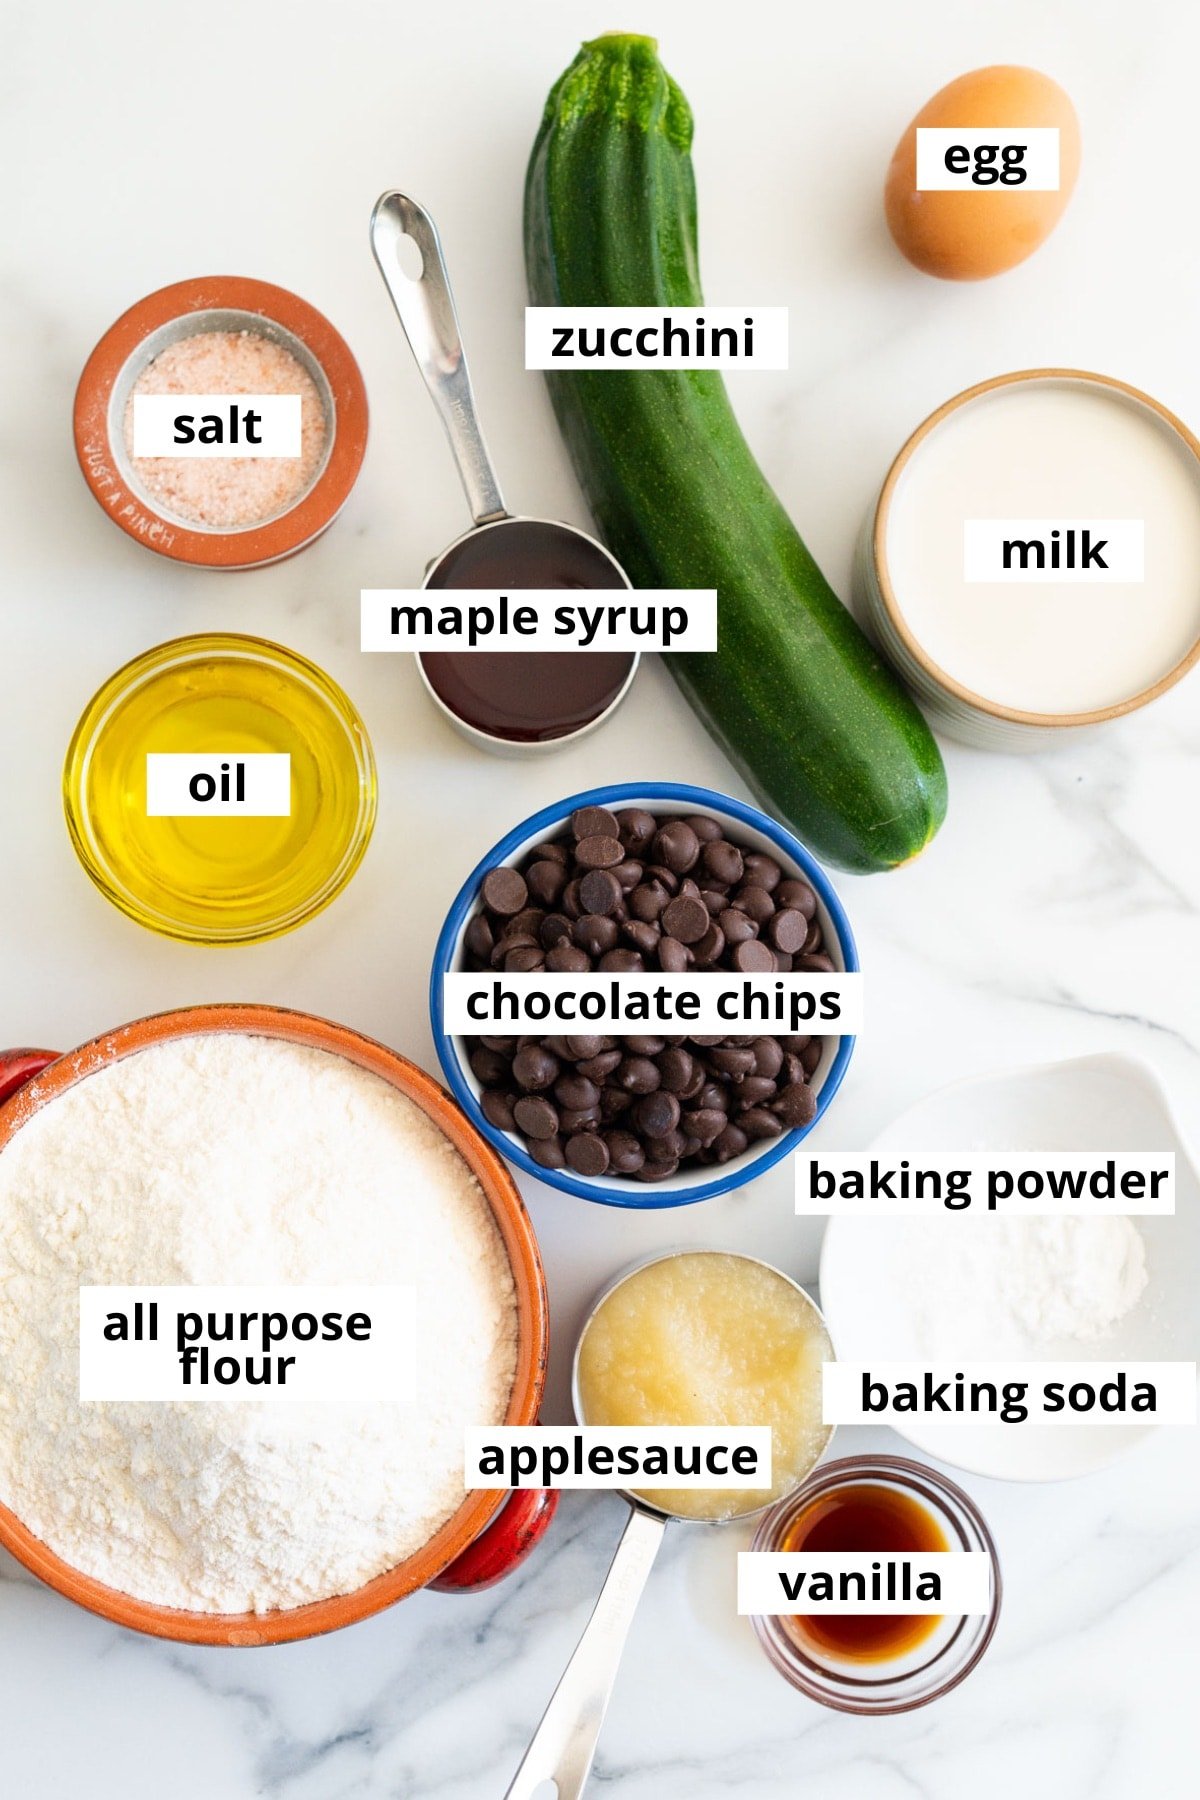 Zucchini, maple syrup, egg, milk, oil, salt, chocolate chips, baking powder, baking soda, apple sauce, vanilla, all purpose flour.